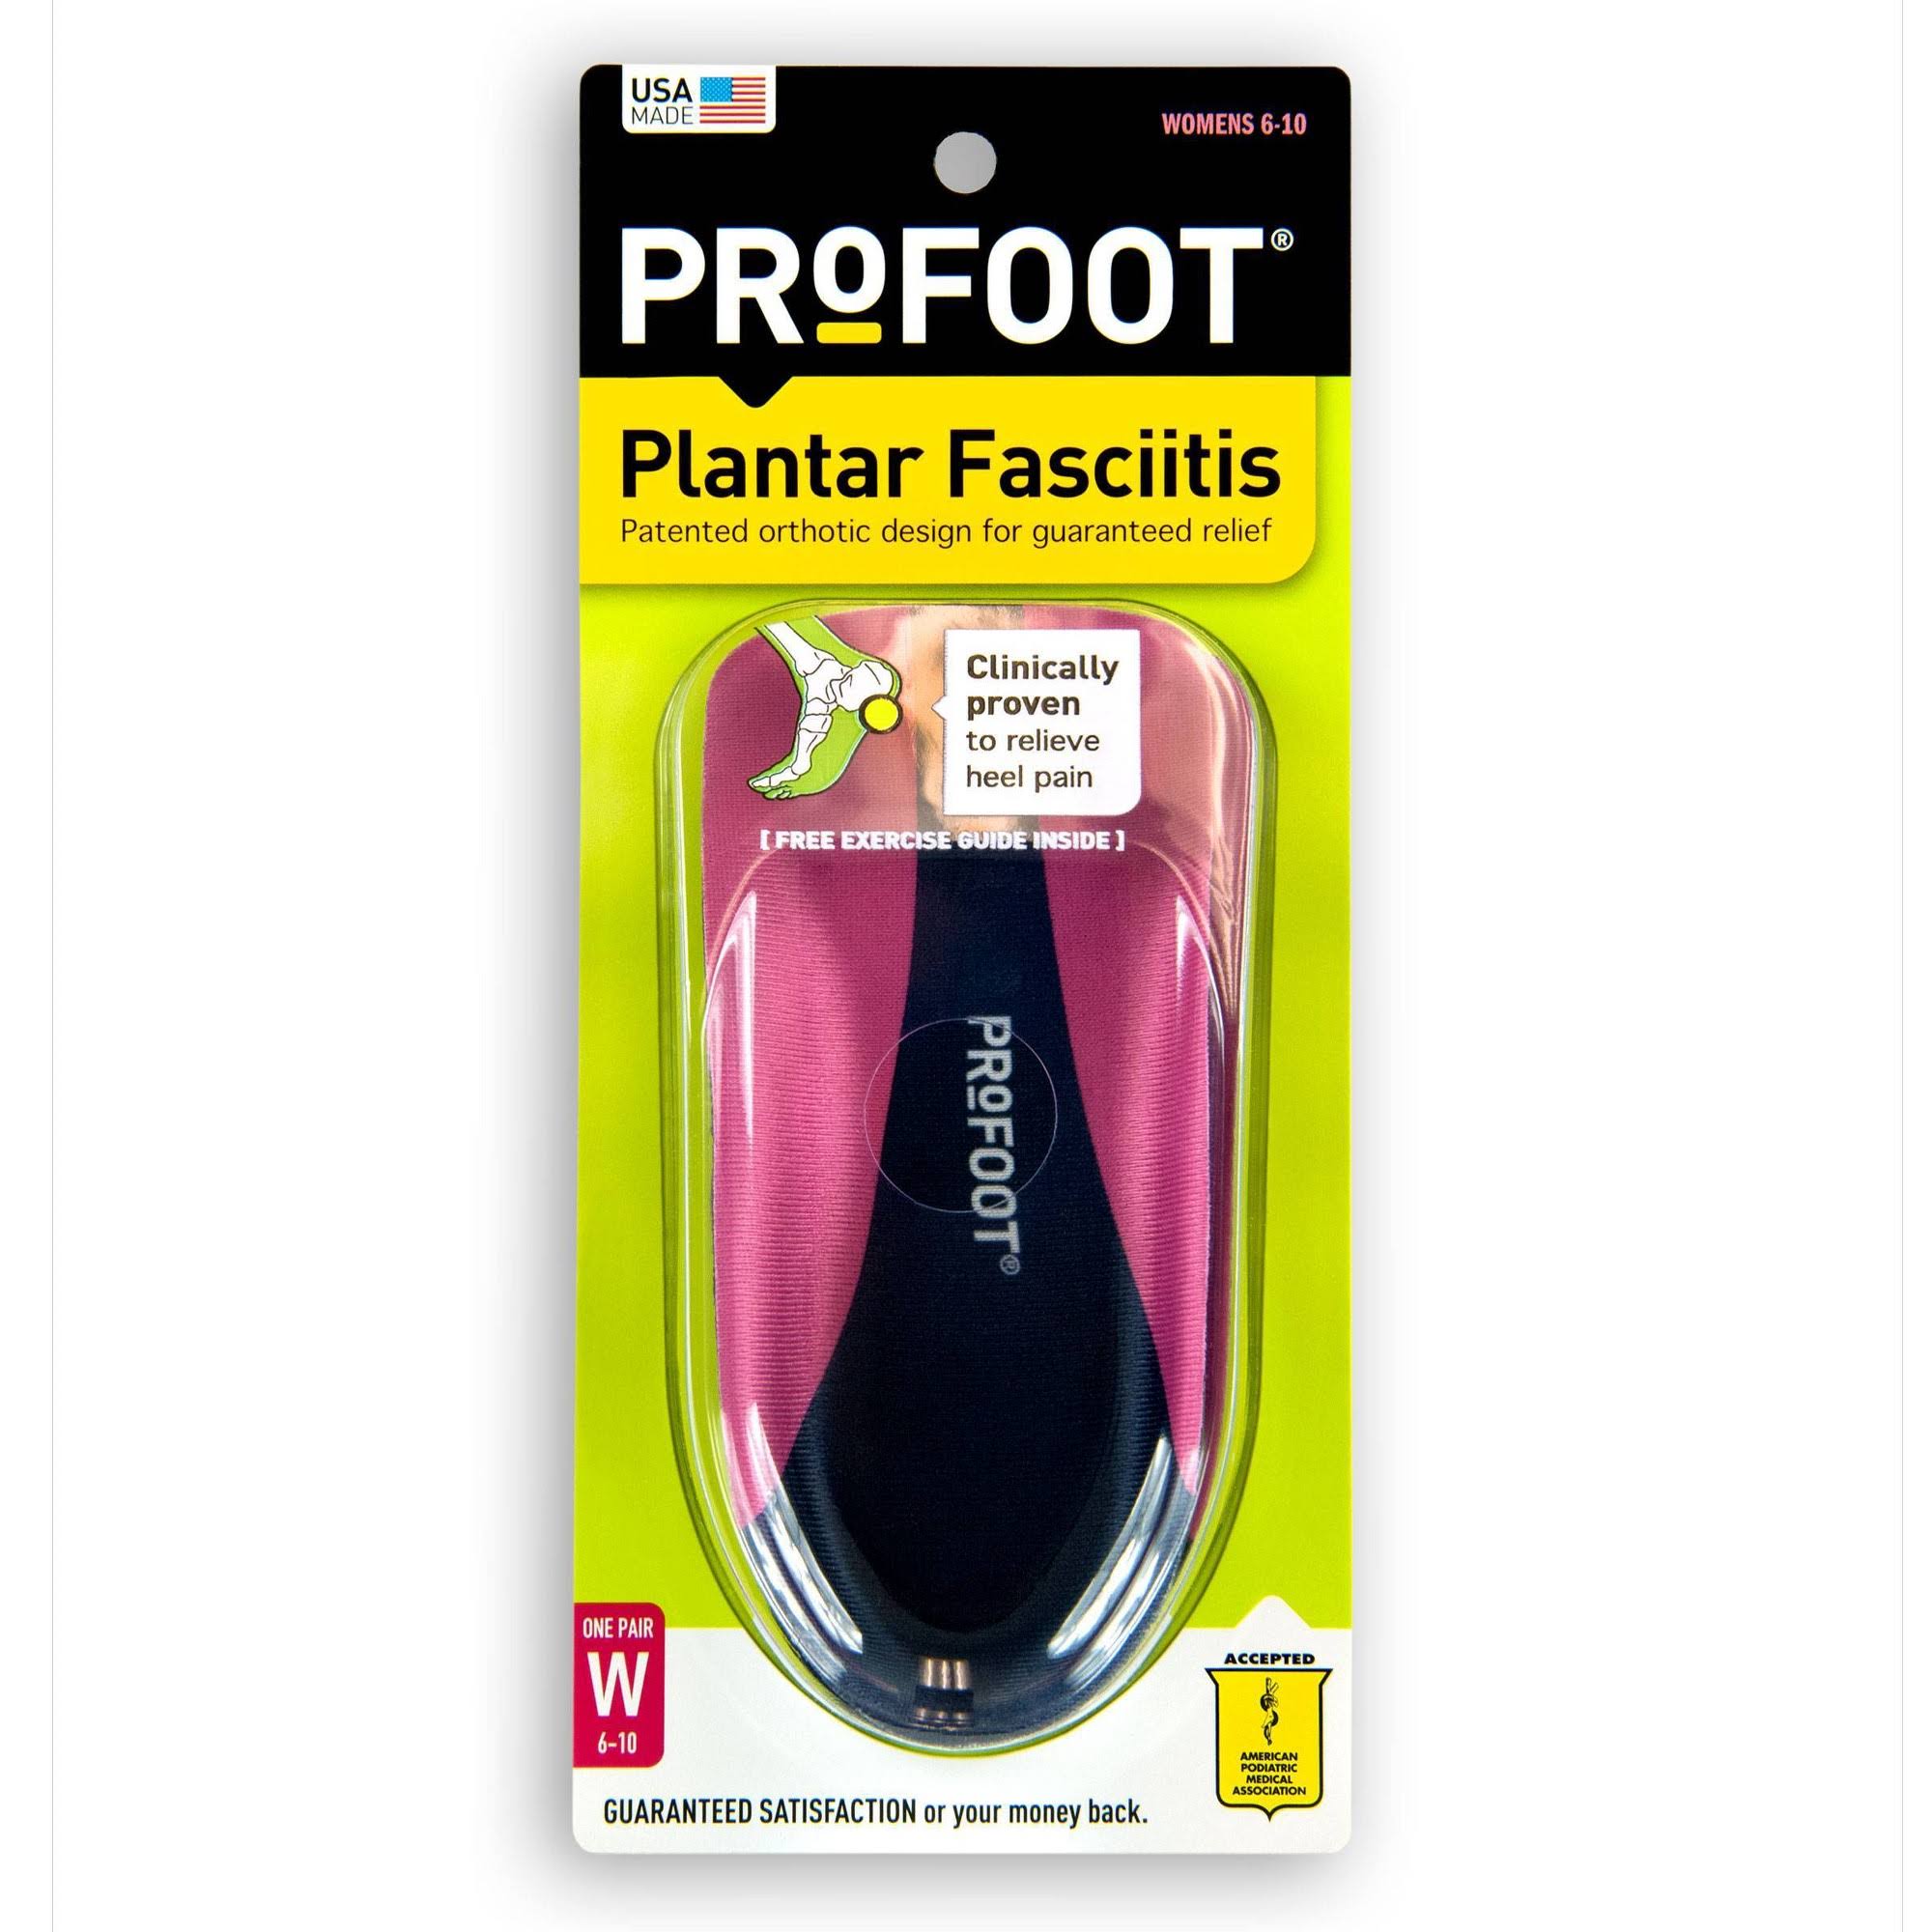 Profoot Women's Plantar Fasciitis Orthotics - Size 6-10